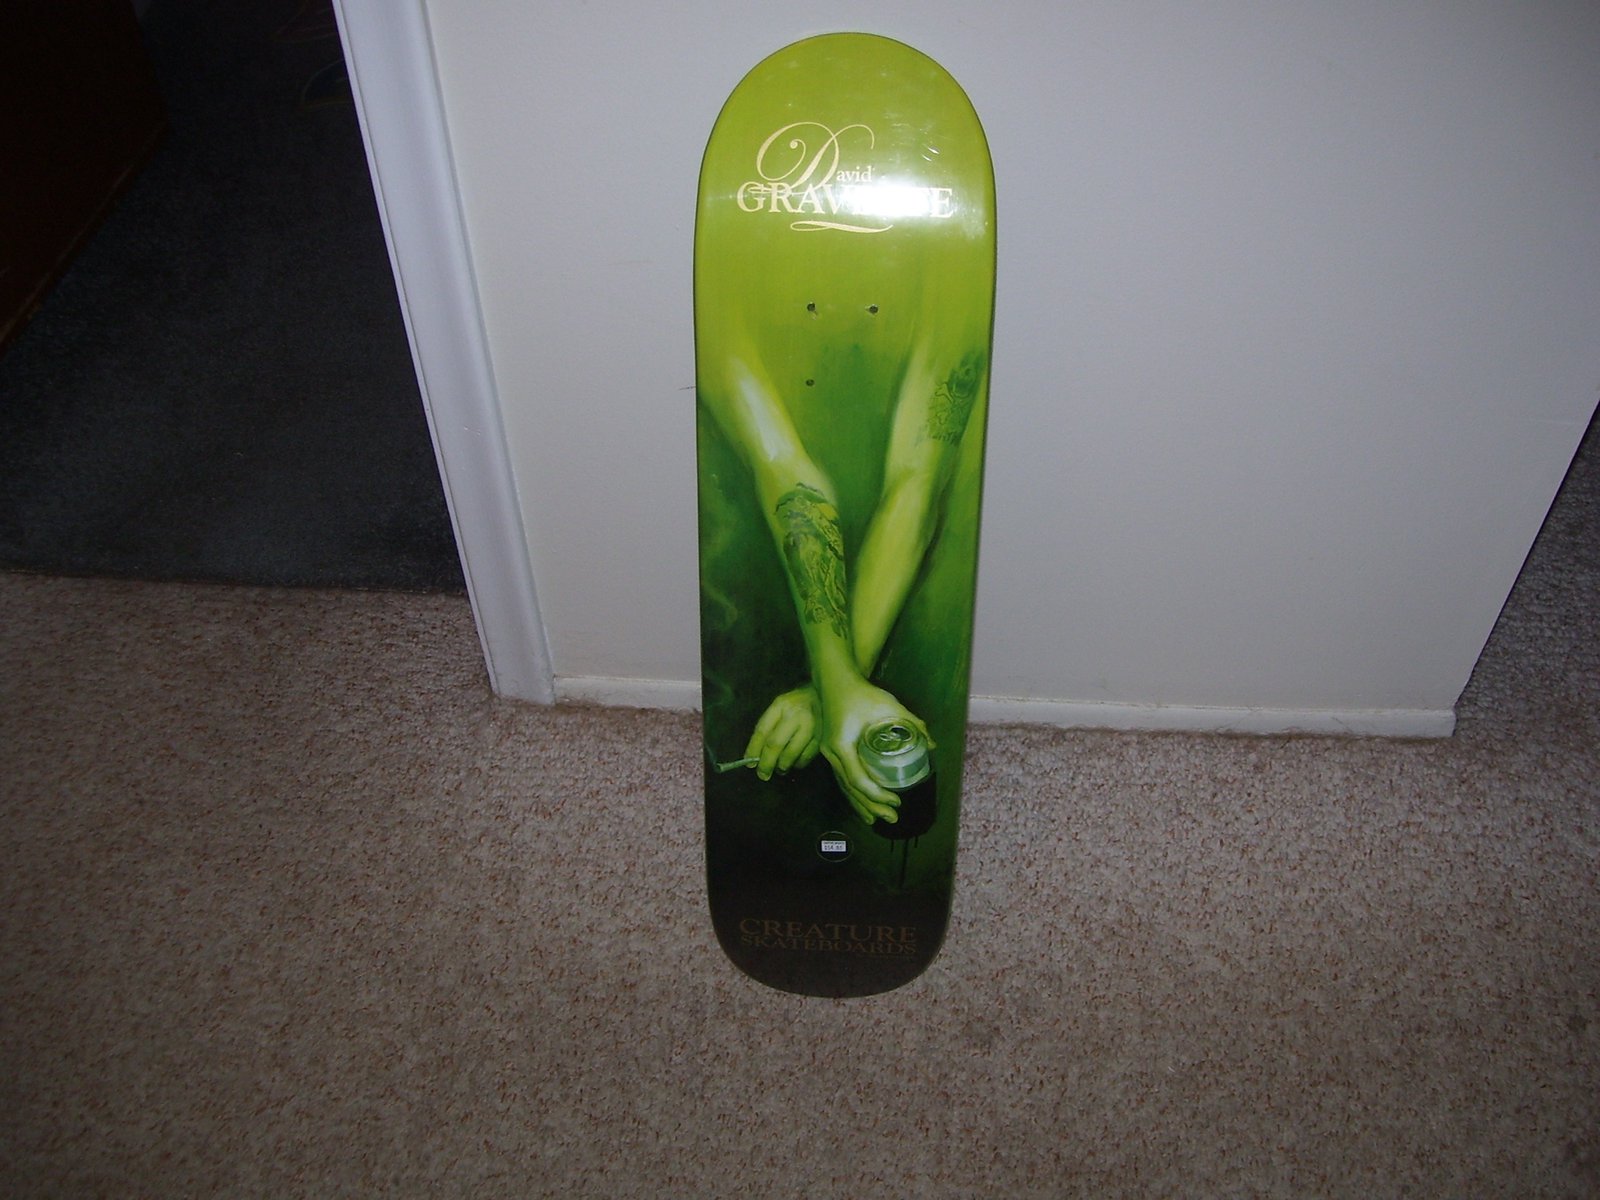 New creature gravette skateboard deck in plastic $35.00